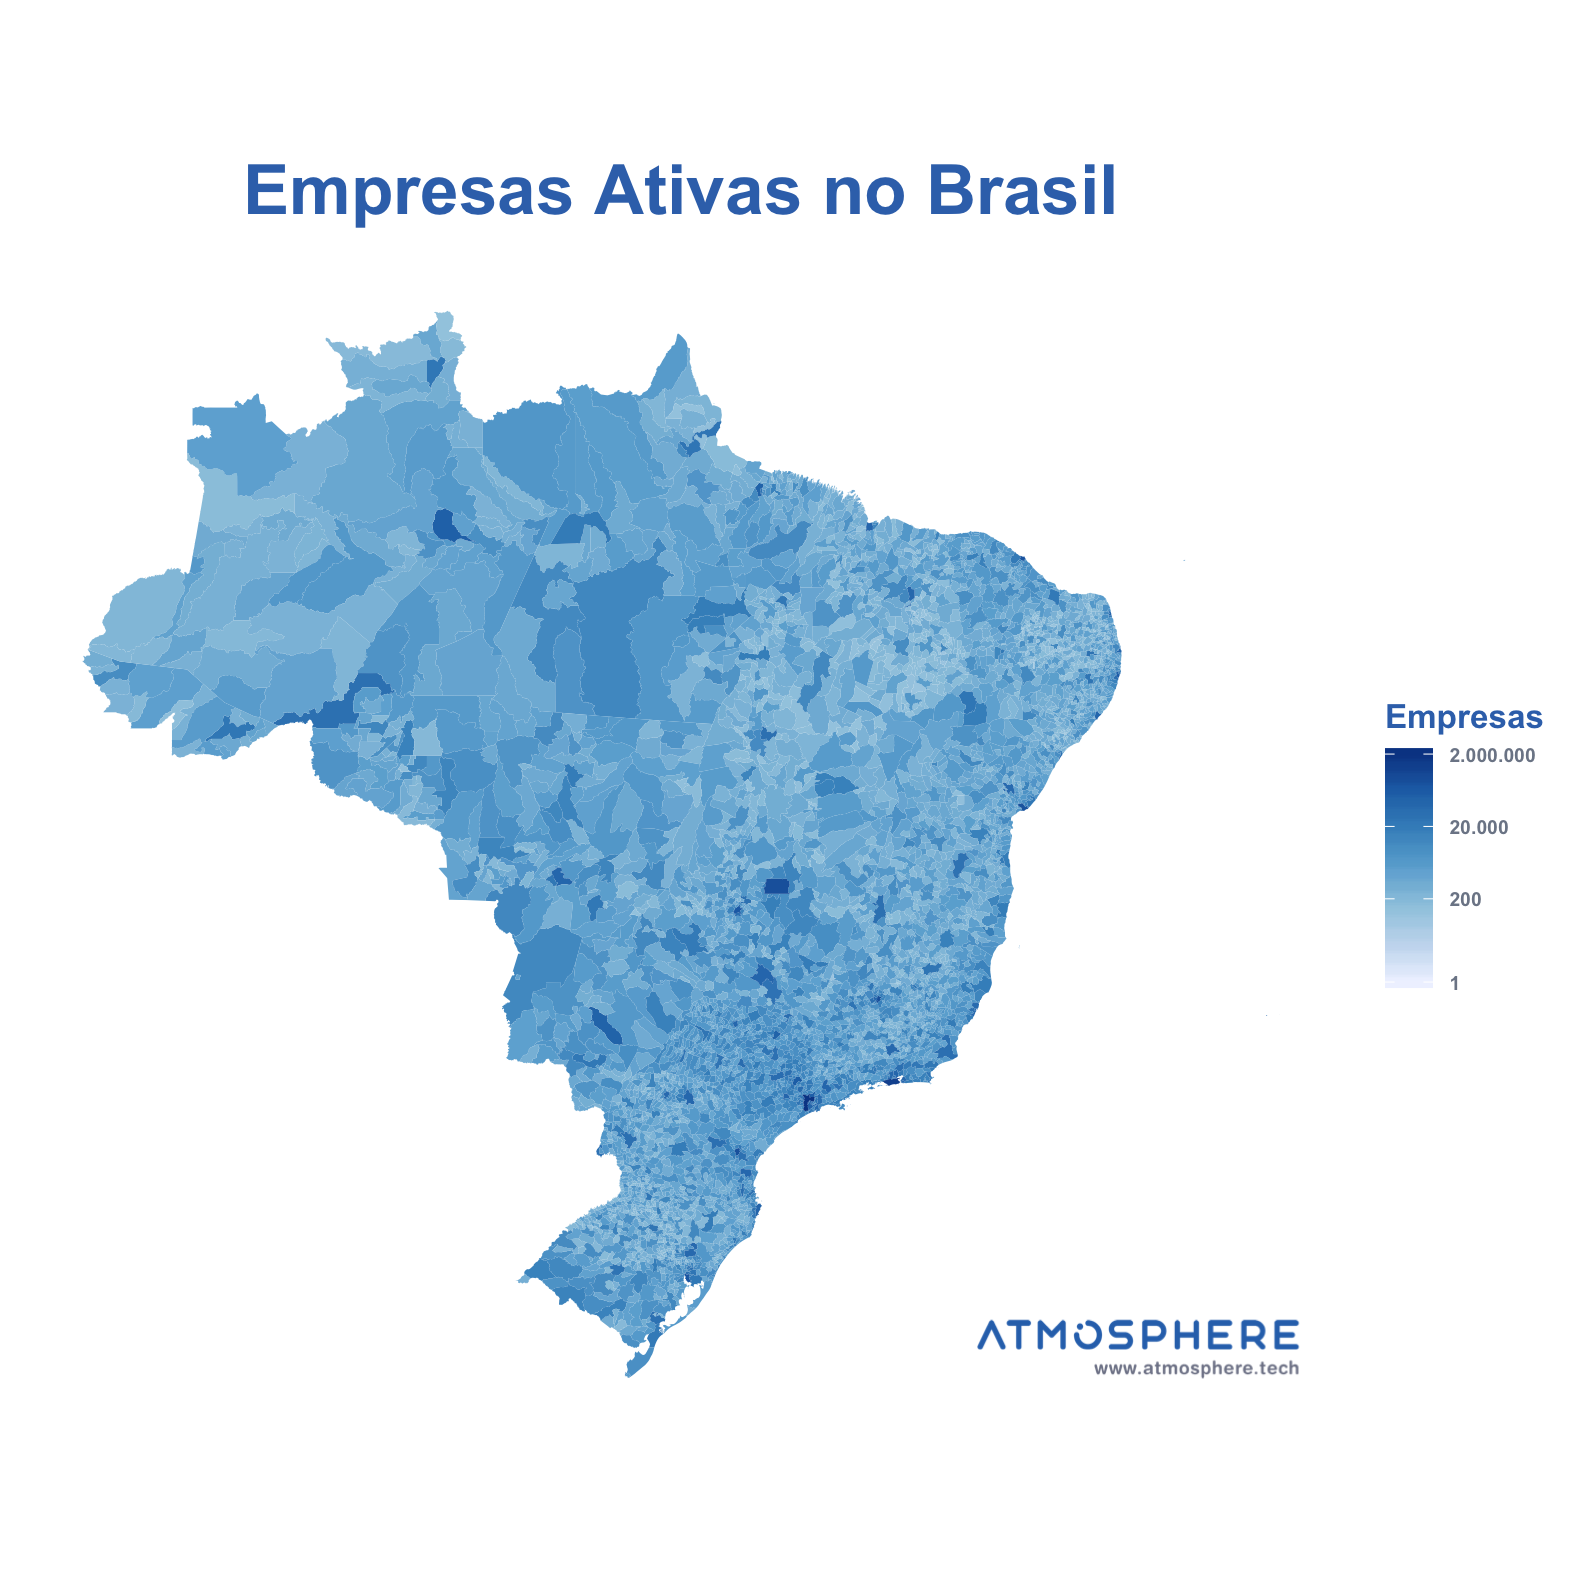 Oportunidados Empresas Ativas por Município no Brasil